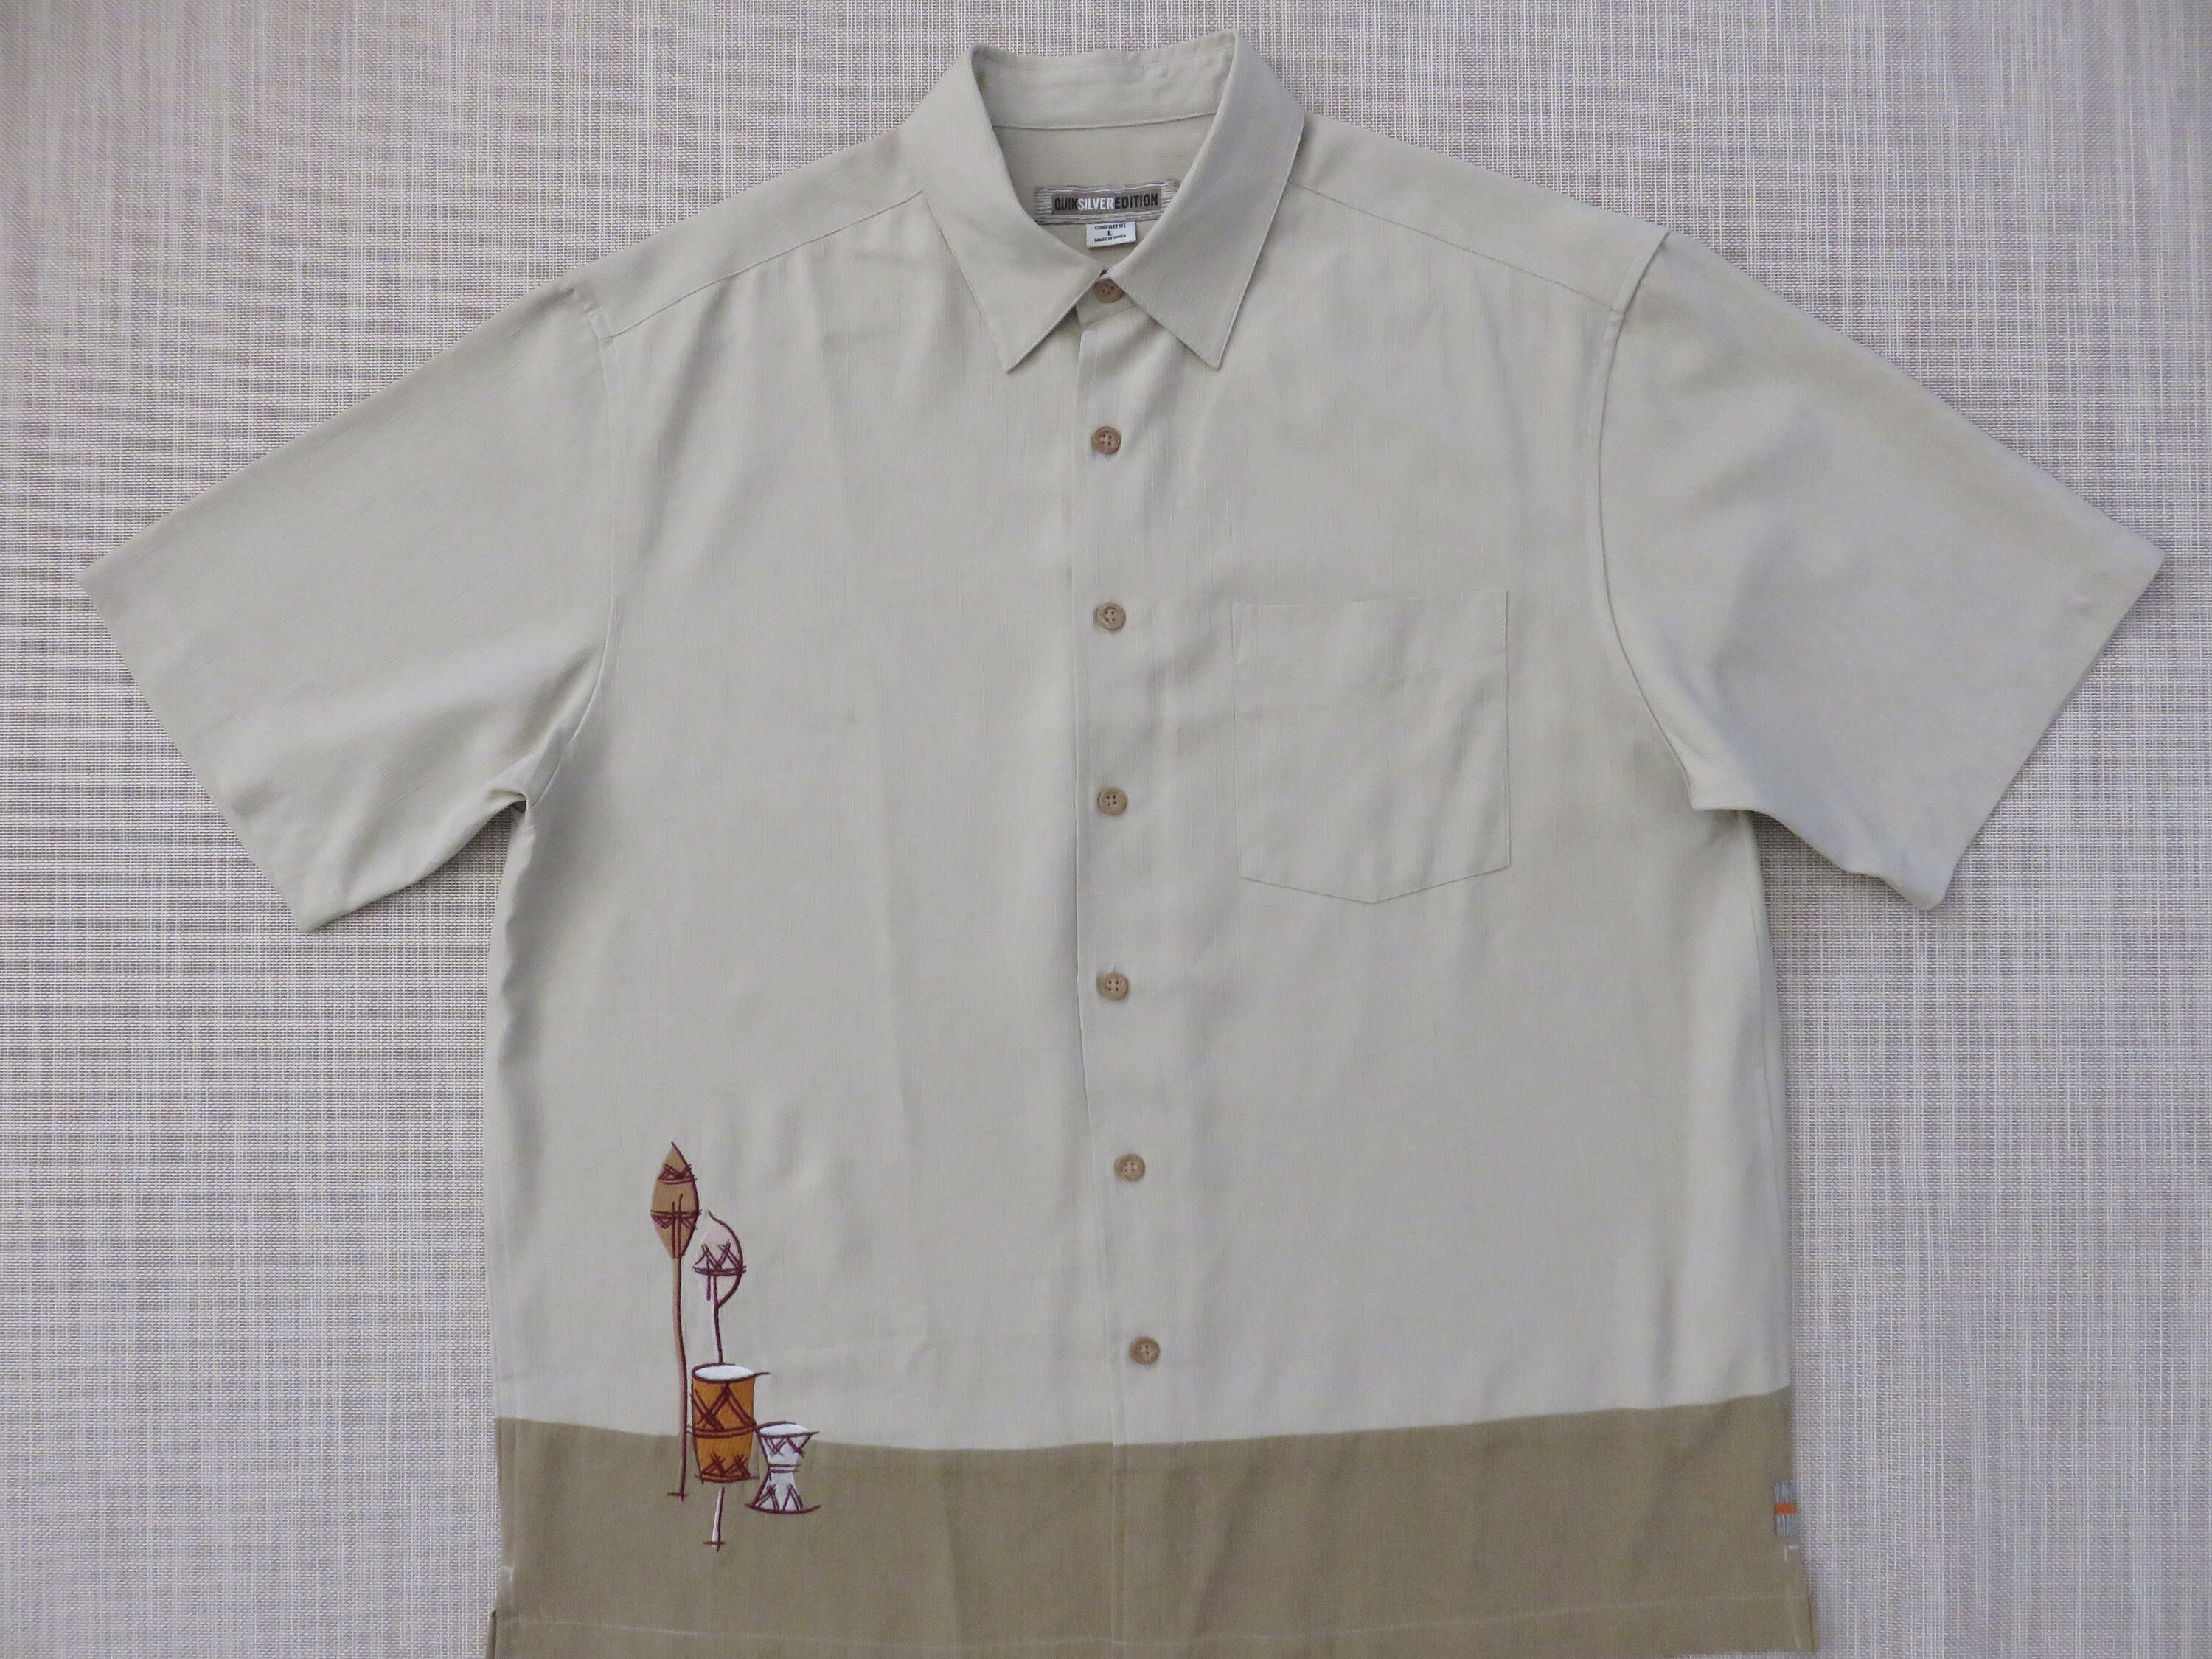 Vintage Hawaiian aloha shirt size XL white and navy blue Tommy Hawaii Kleding Herenkleding Overhemden & T-shirts Oxfords & Buttondowns 